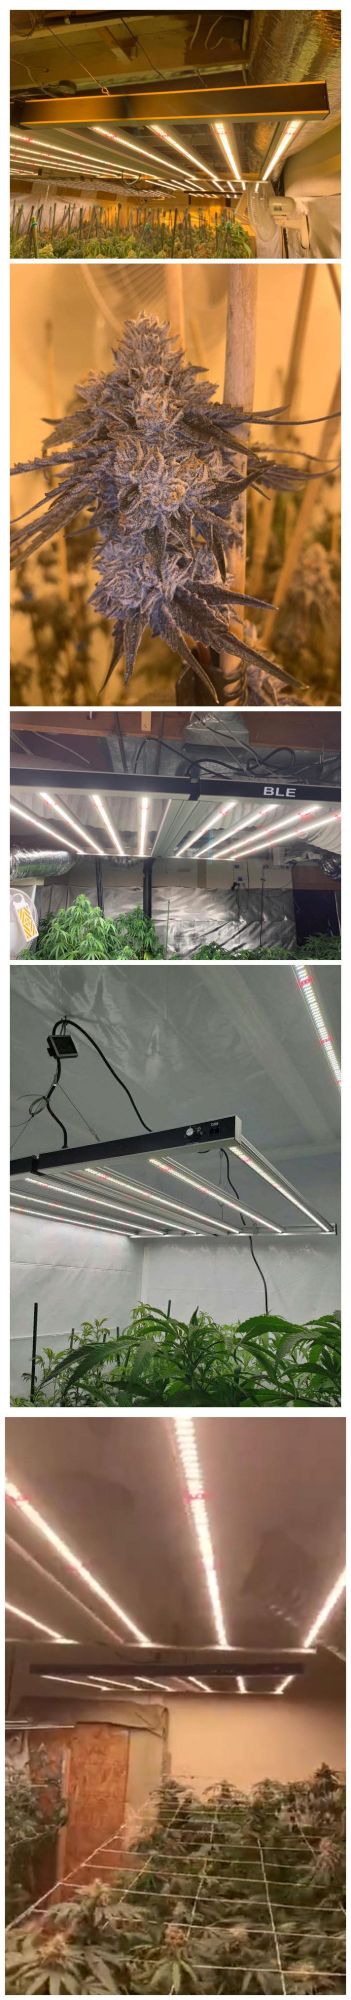 880W Supplemen Lighting Samsung Lm301b LED Grow Light Bar Full Spectrum for Greenhouse Indoor Grow